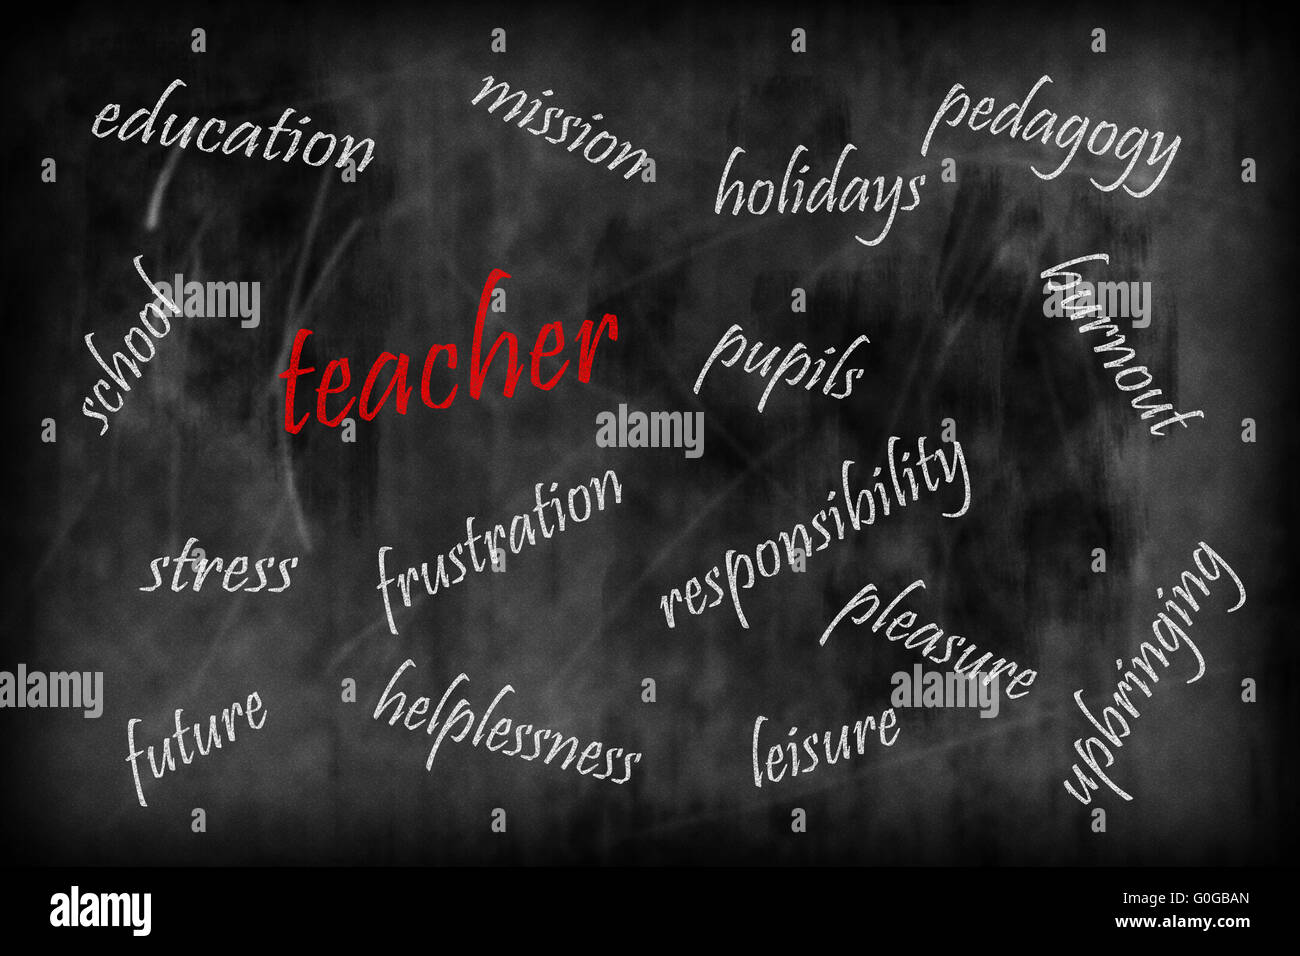 Teacher - keyword collection on Teacher Stock Photo